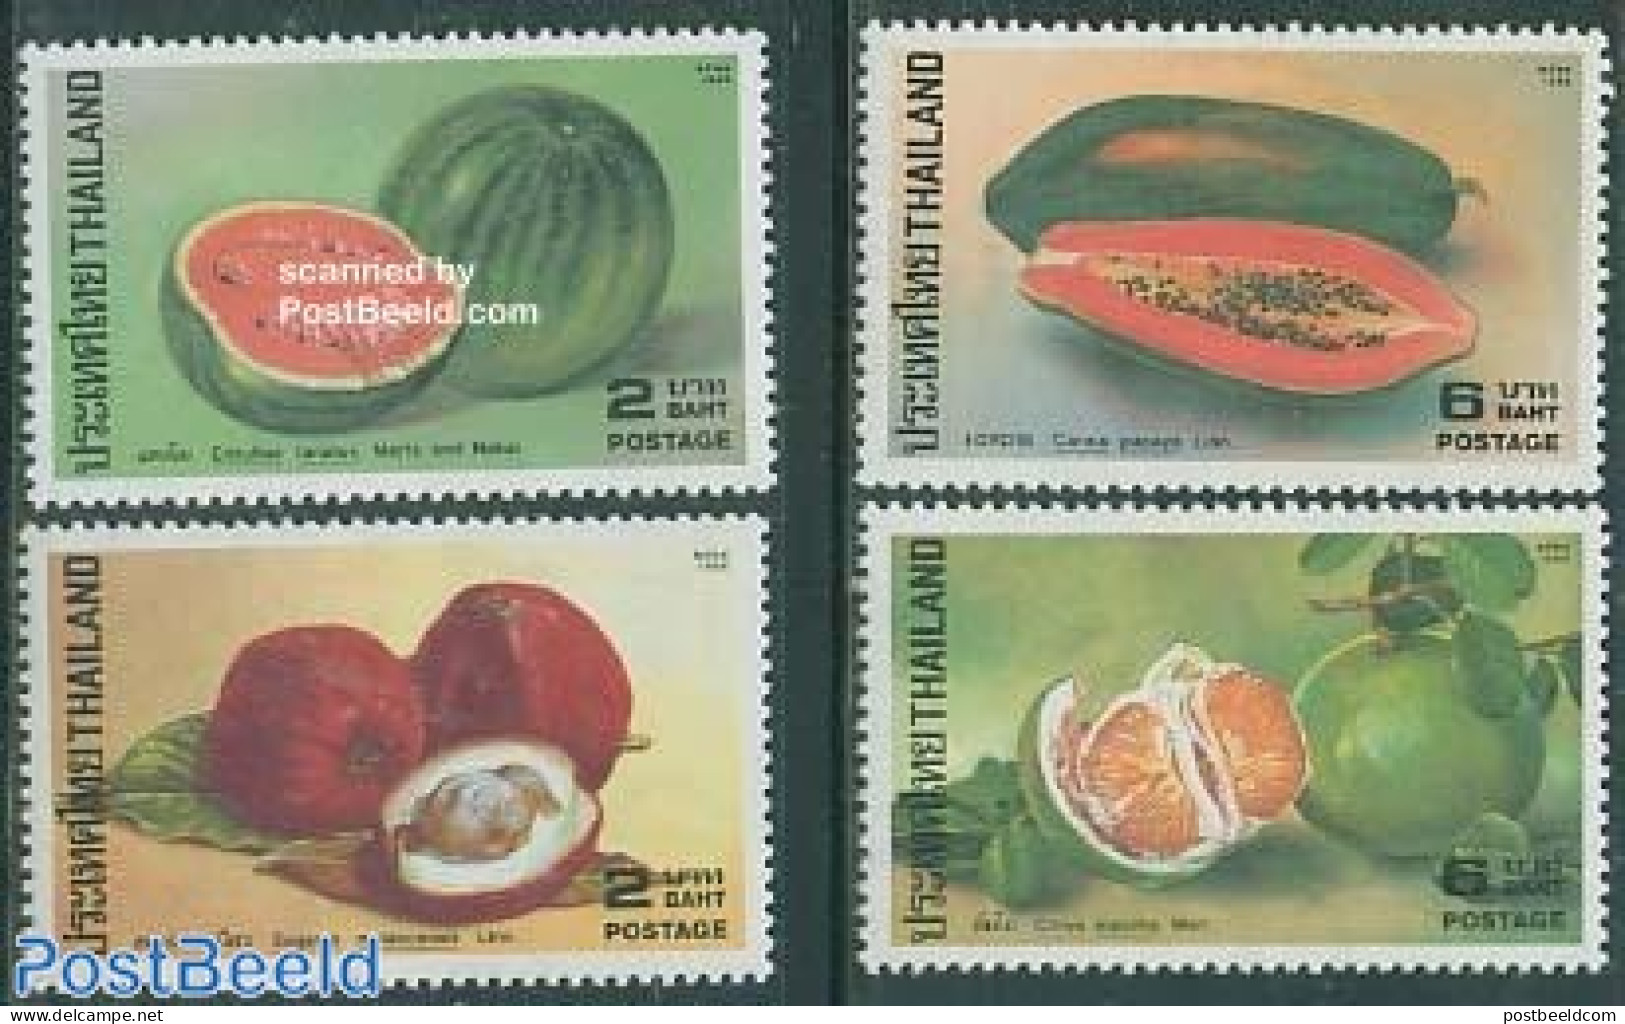 Thailand 1986 Fruits 4v, Mint NH, Nature - Fruit - Fruit